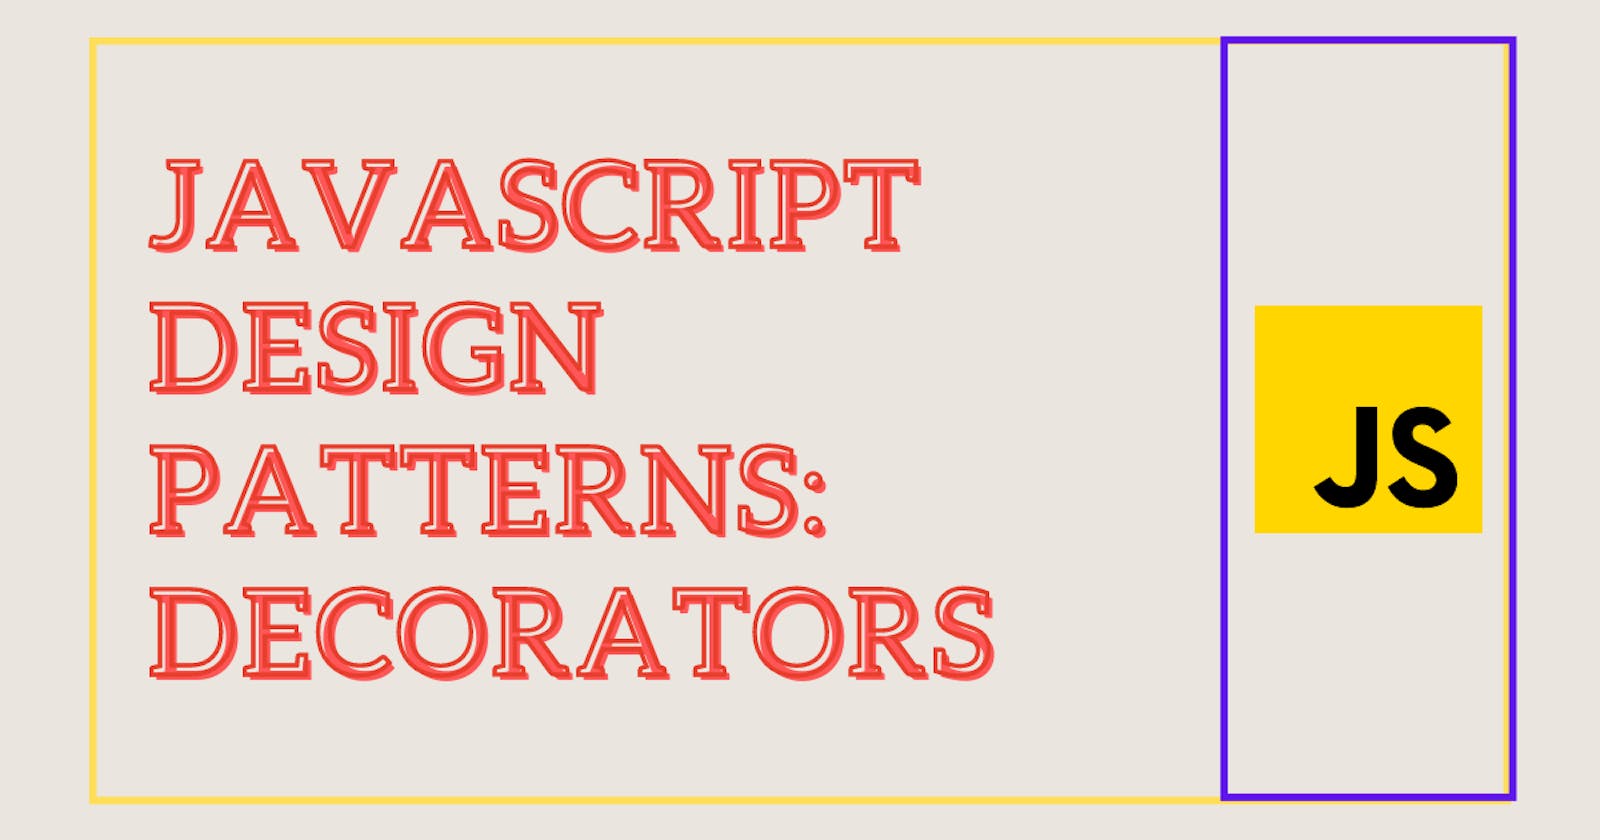 JavaScript design patterns: Decorators